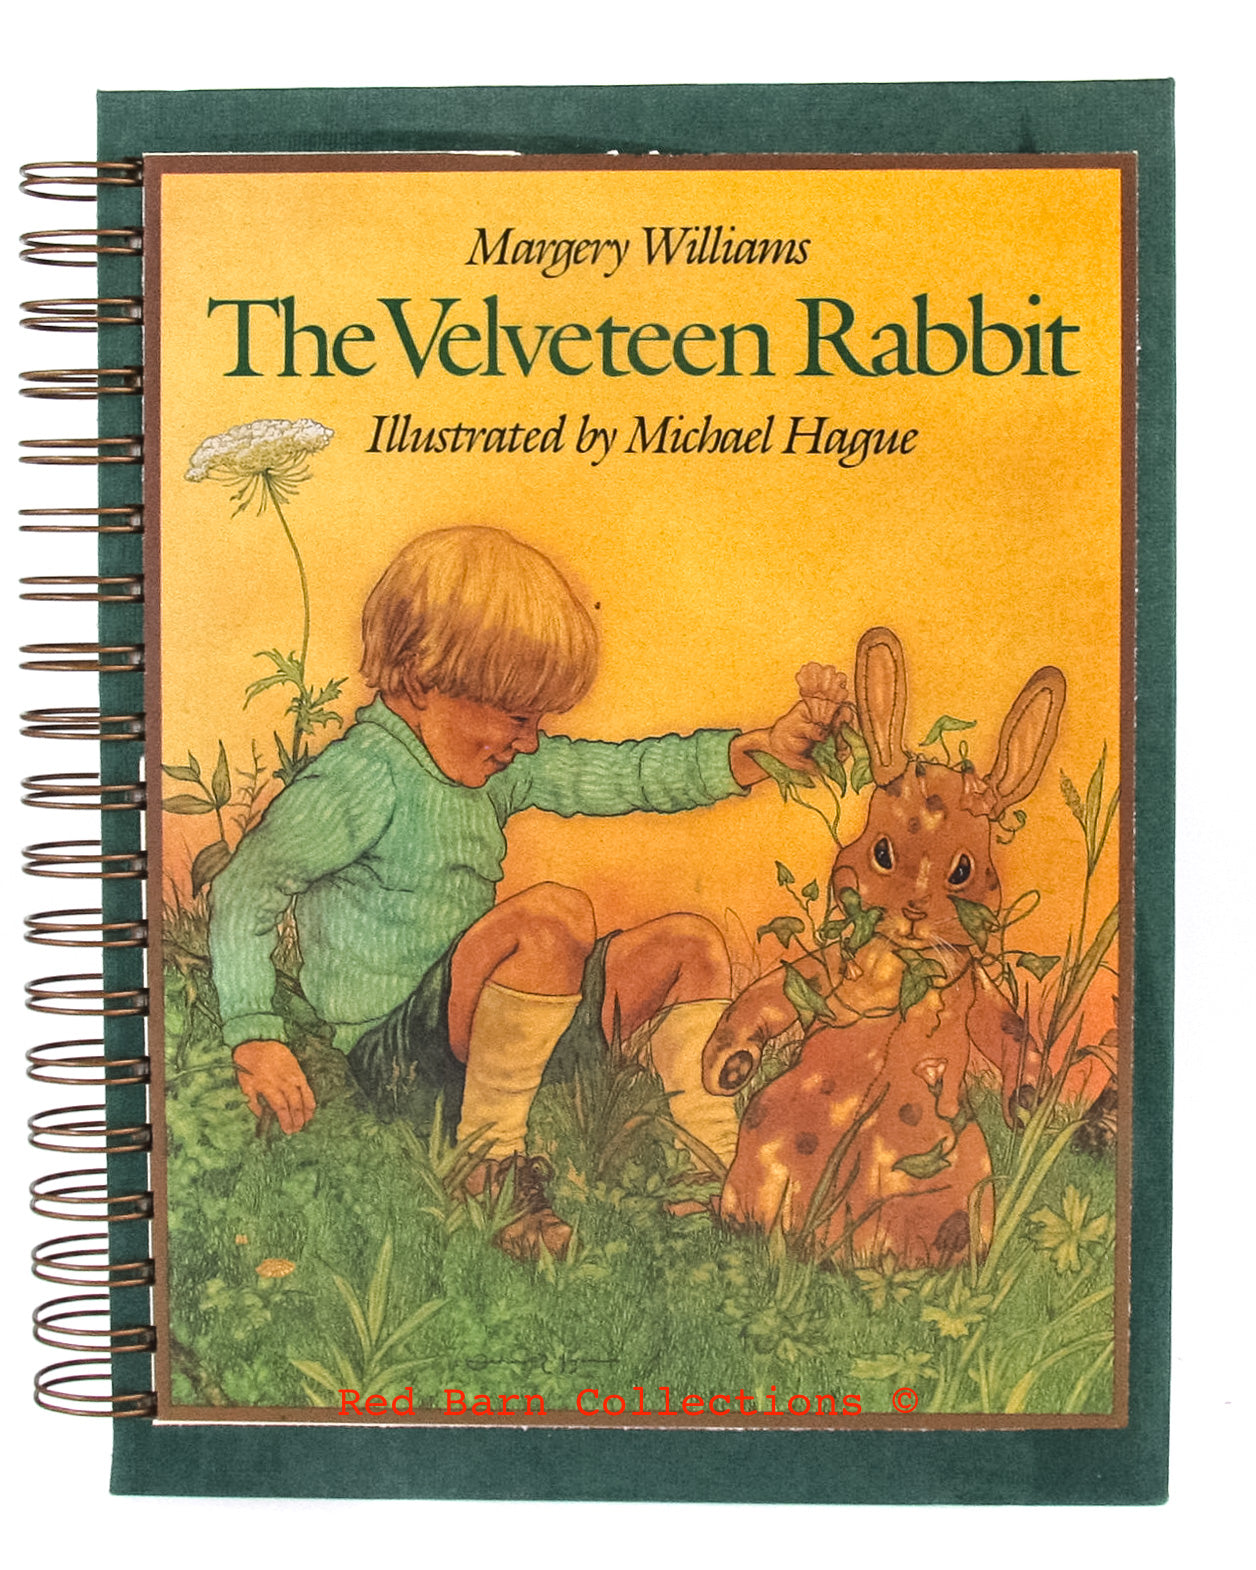 Velveteen Rabbit-Red Barn Collections